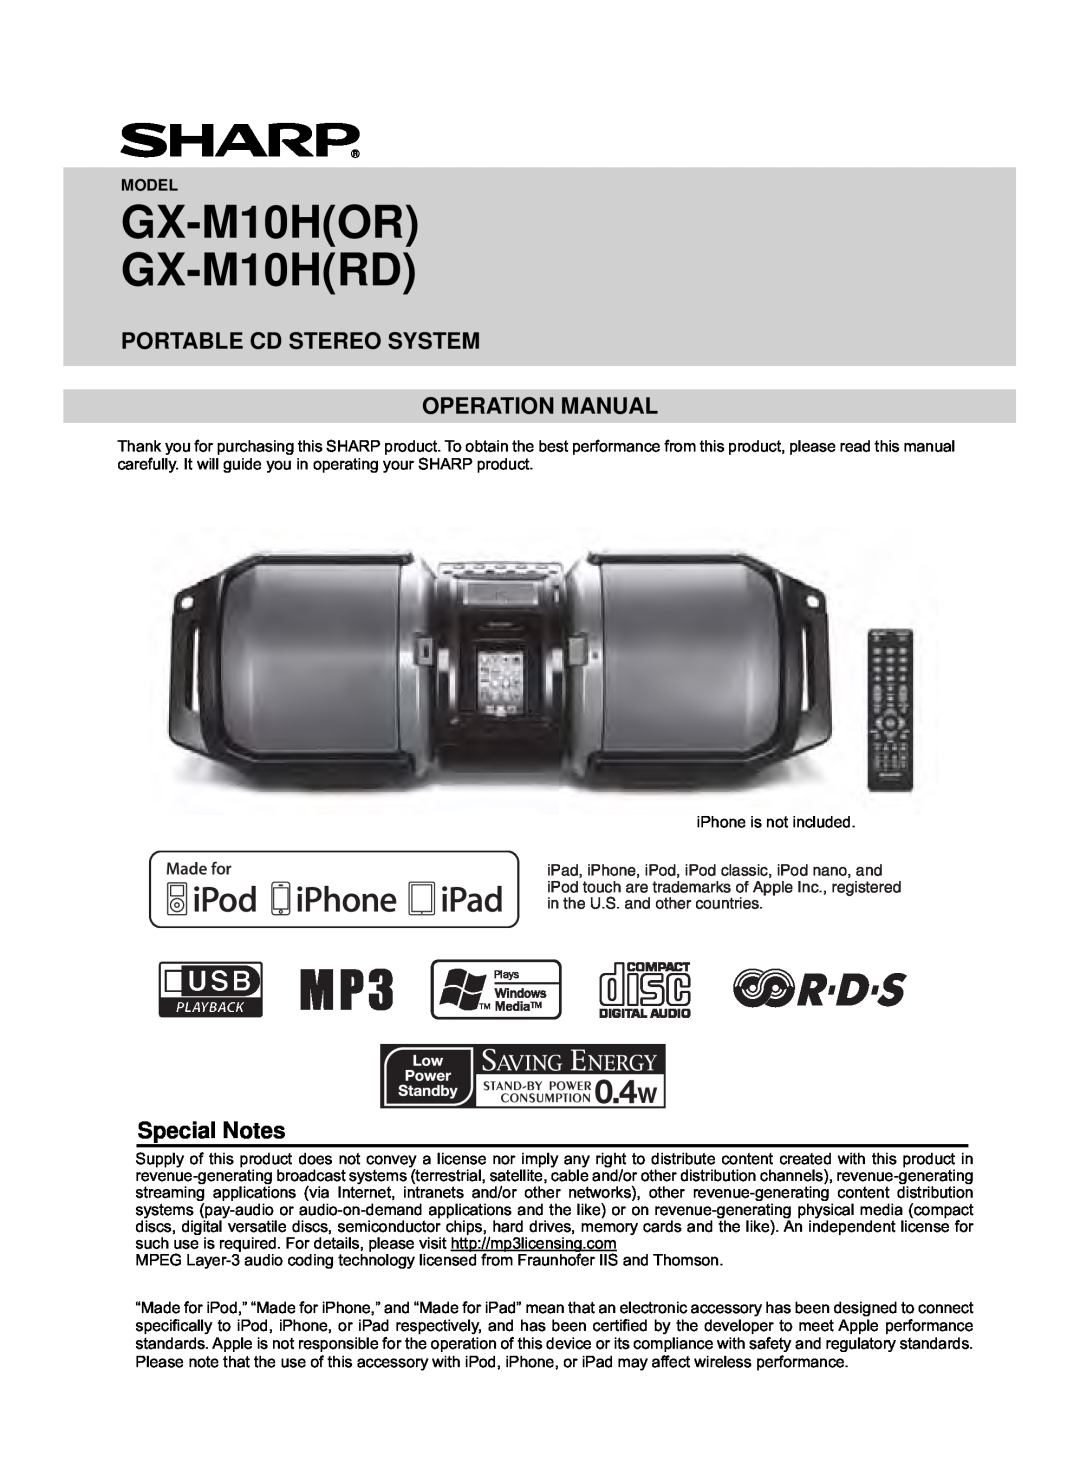 Sharp GX-M10H(RD), GX-M10H(OR) operation manual 12/10/26 GX-M10_Front_SCEE.fm, GX-M10HOR, GX-M10HRD 